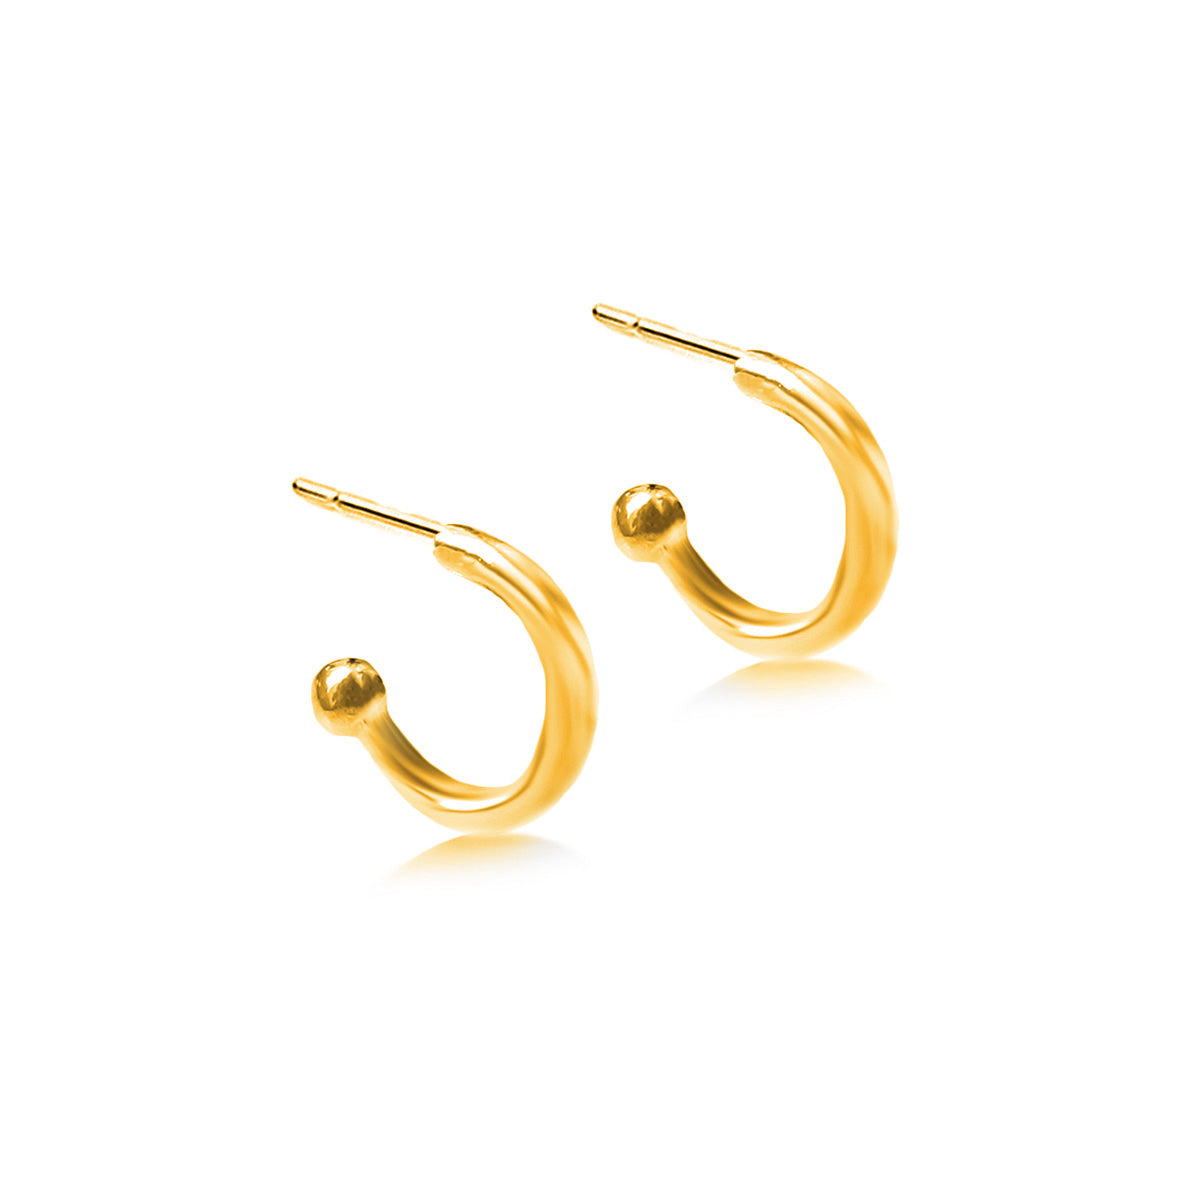 Gold Plated Ball End Open Hoop Earrings | Hersey & Son Silversmiths